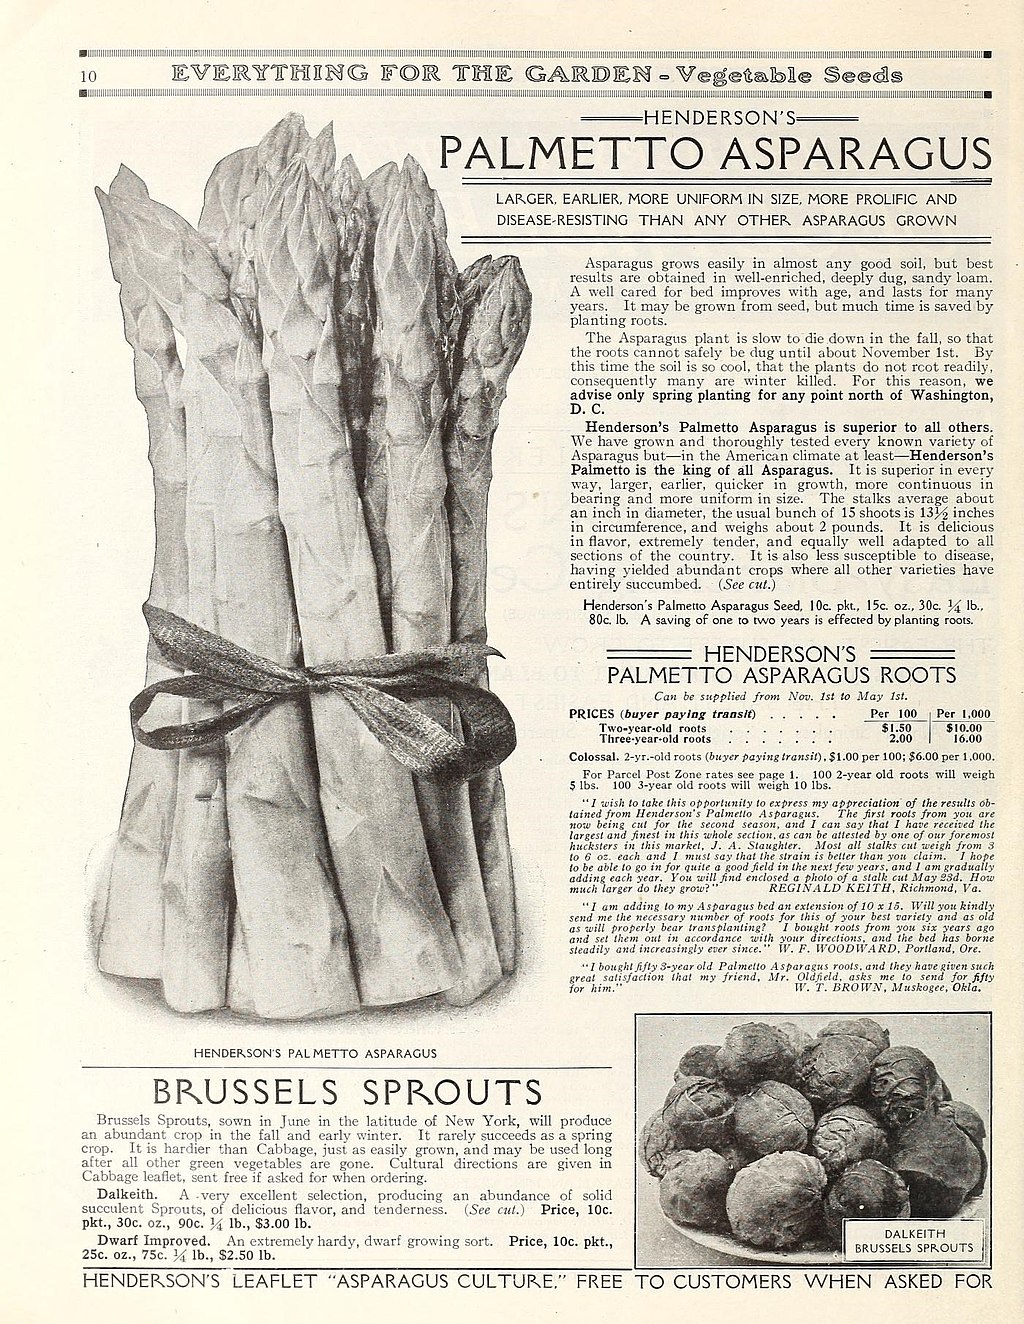 Henderson's Palmetto Asparagus ad, ca.1915